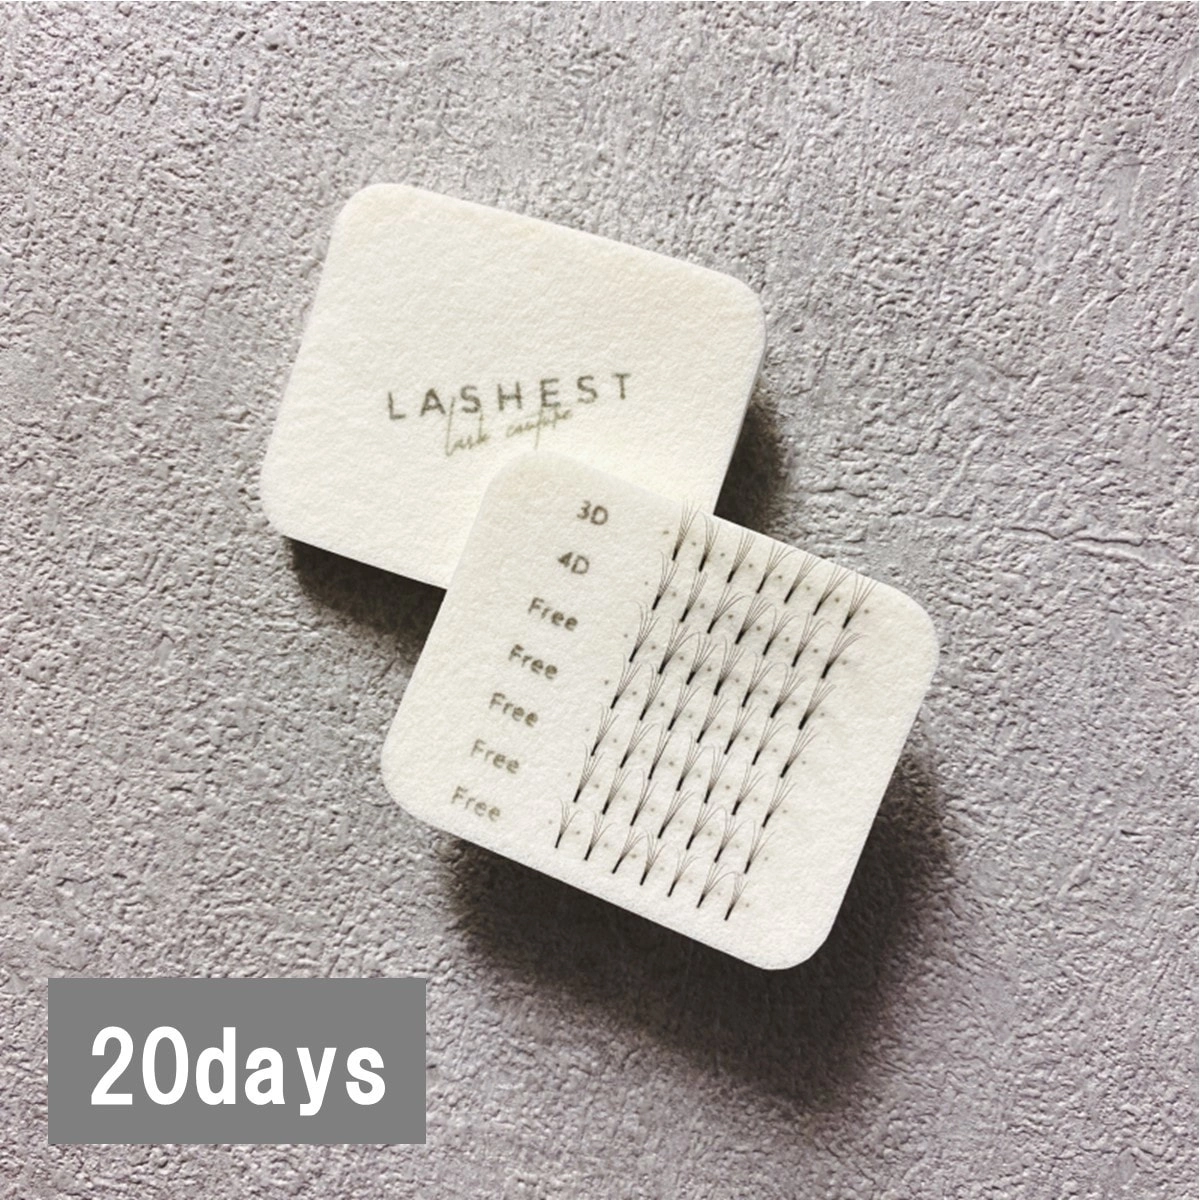 【LASHEST】ピックアップトレーニングスポンジ20Days